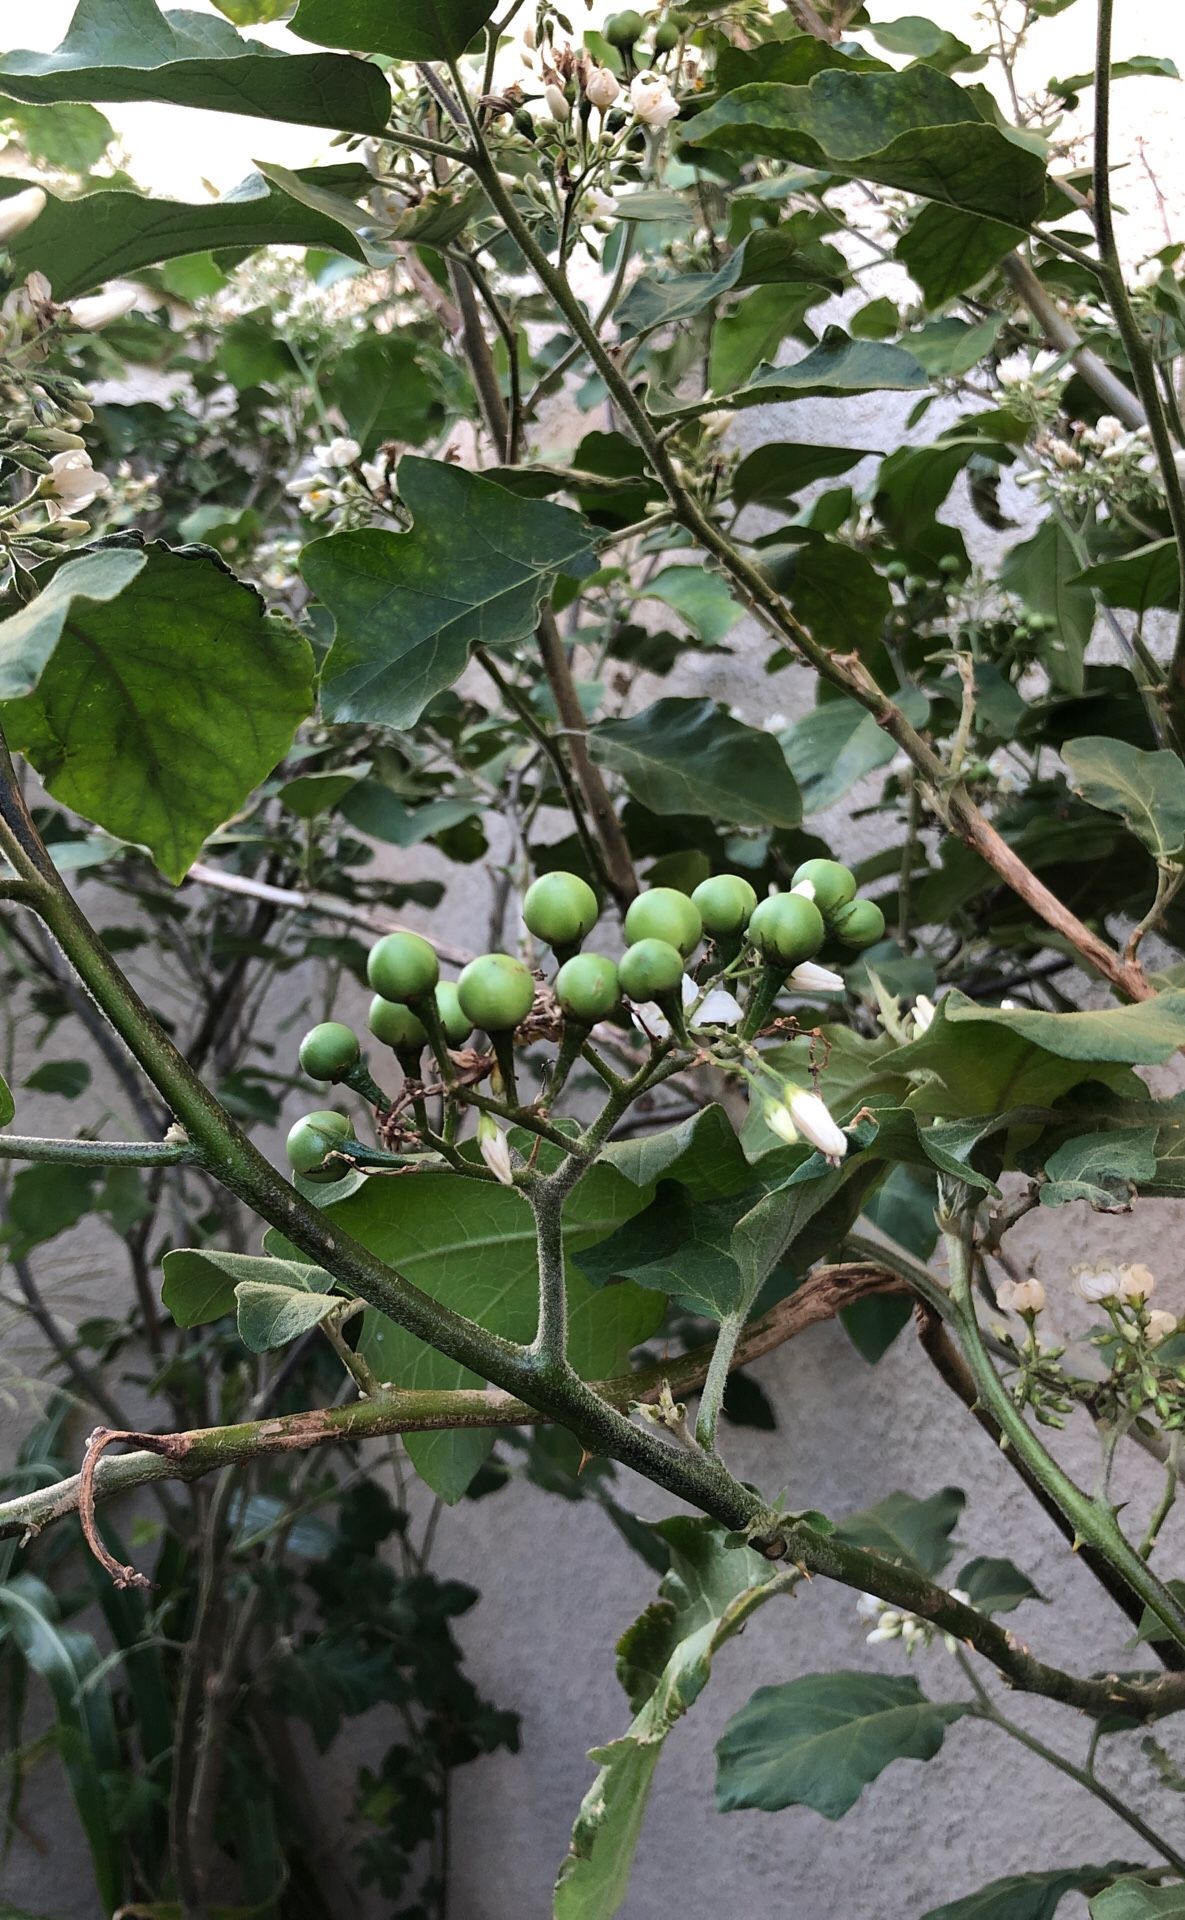 Turkey Berry or Thai Pea eggplant plant $35-$40